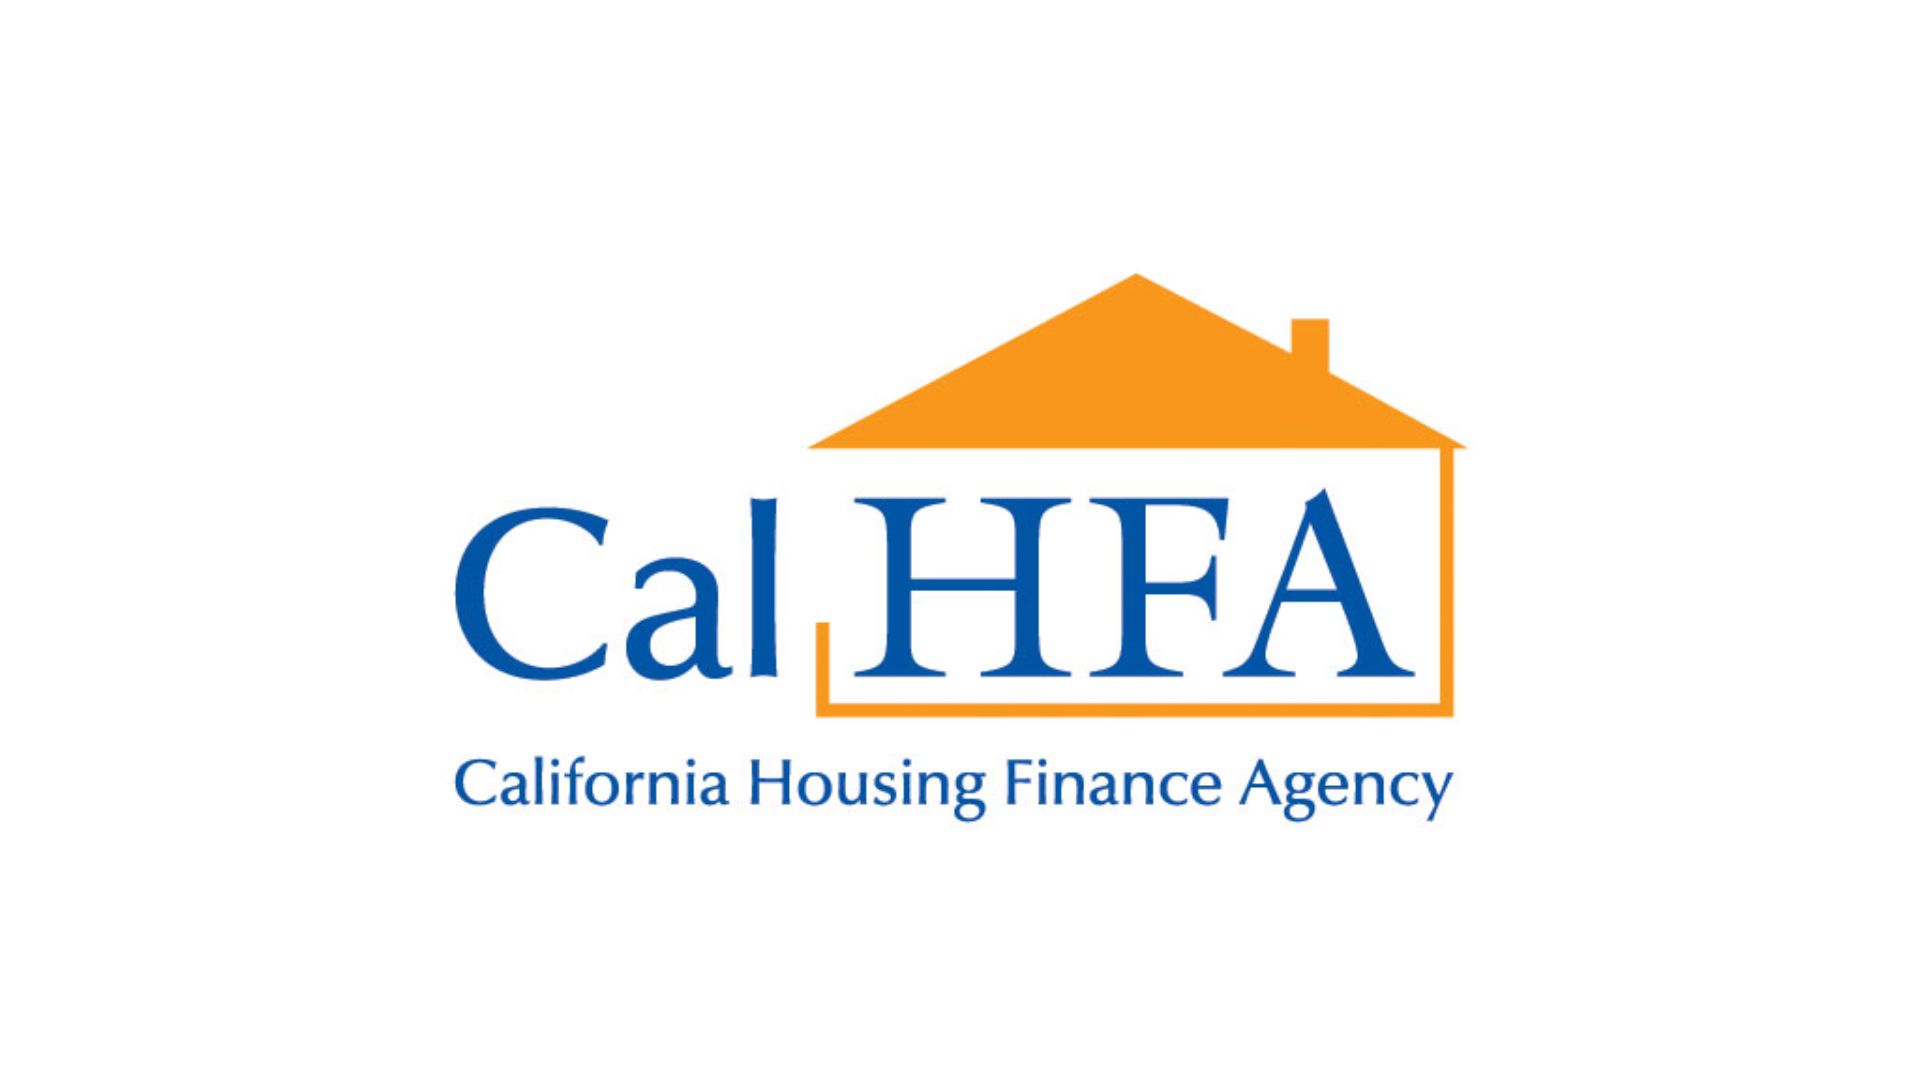 California Housing Finance Agency (CalHFA).